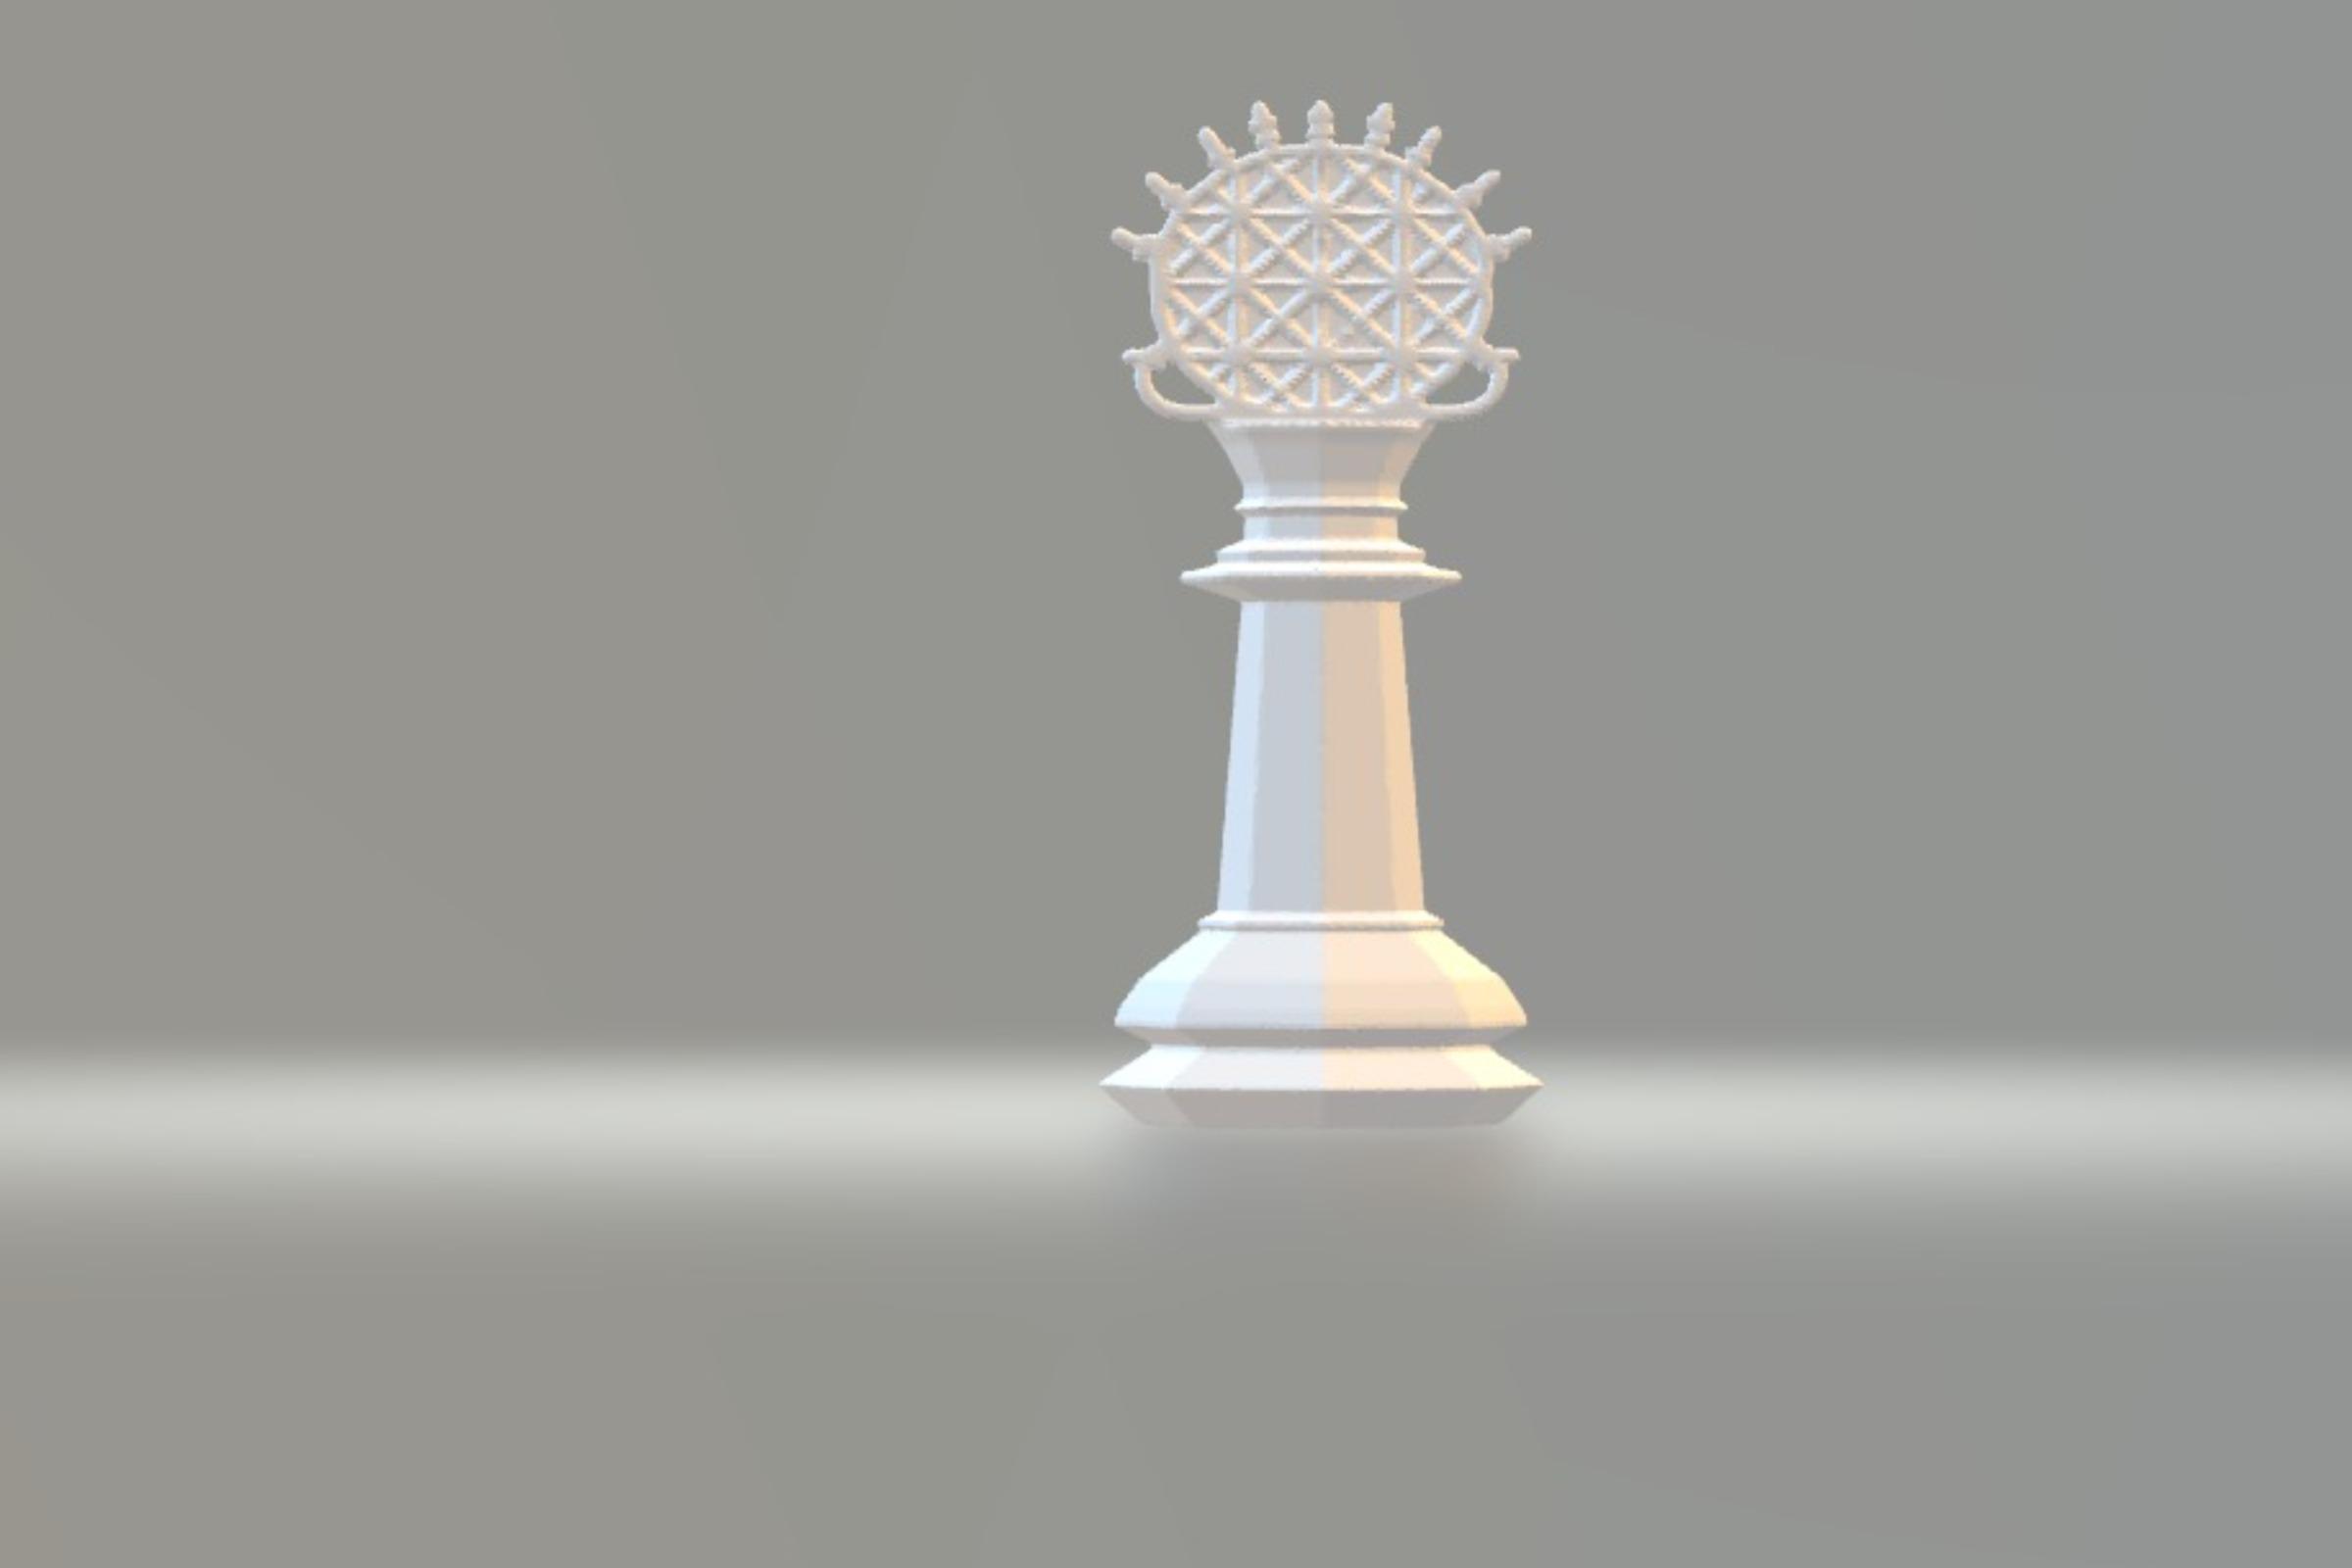 Chess set - Ankara city theme 3d model